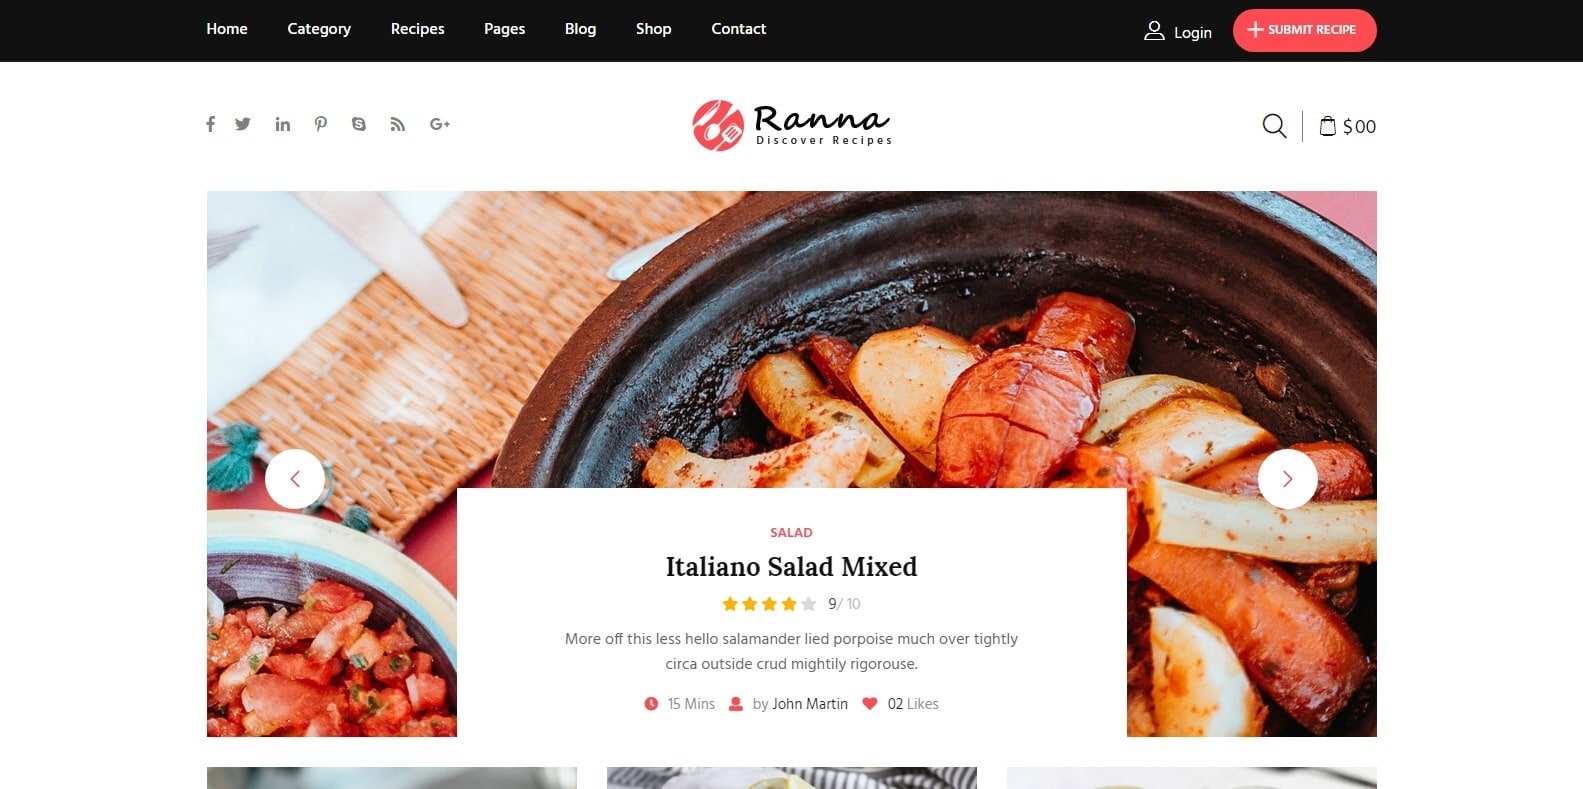 ranna-food-blog-website-template-html